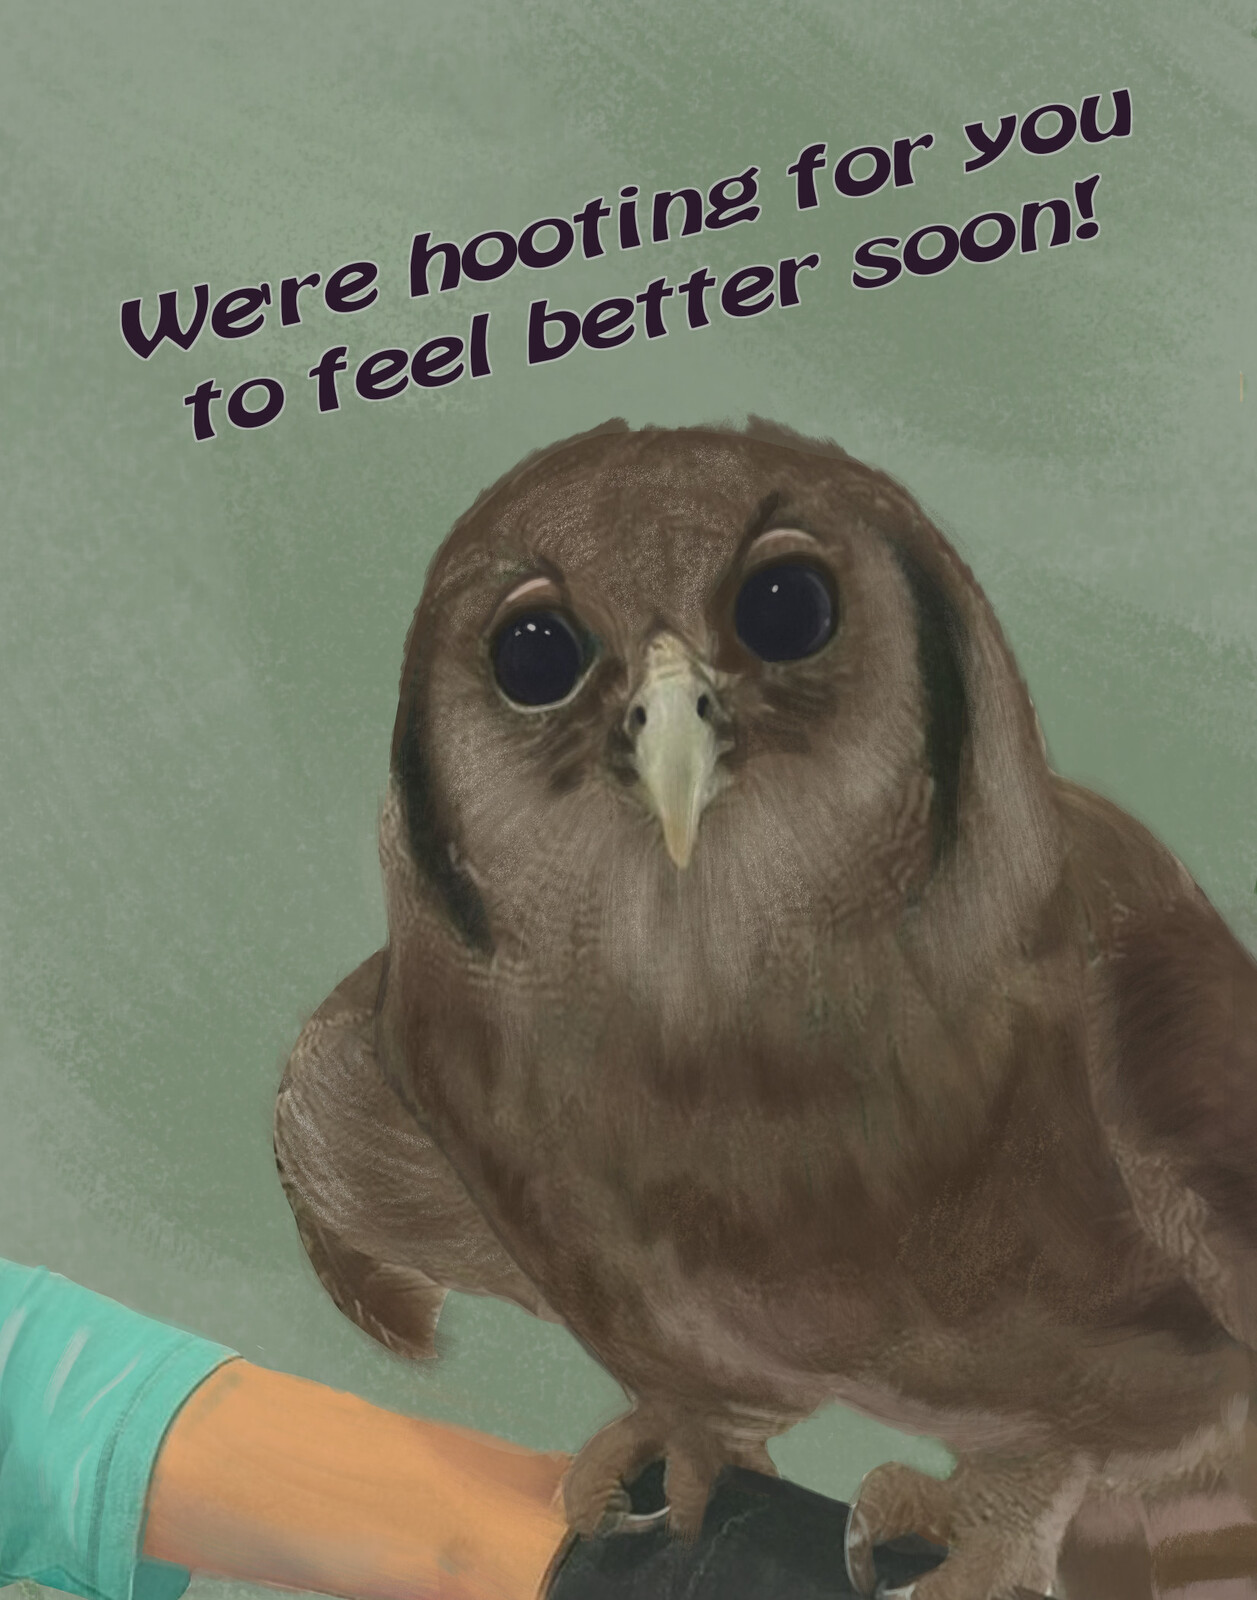 Get Well Owl